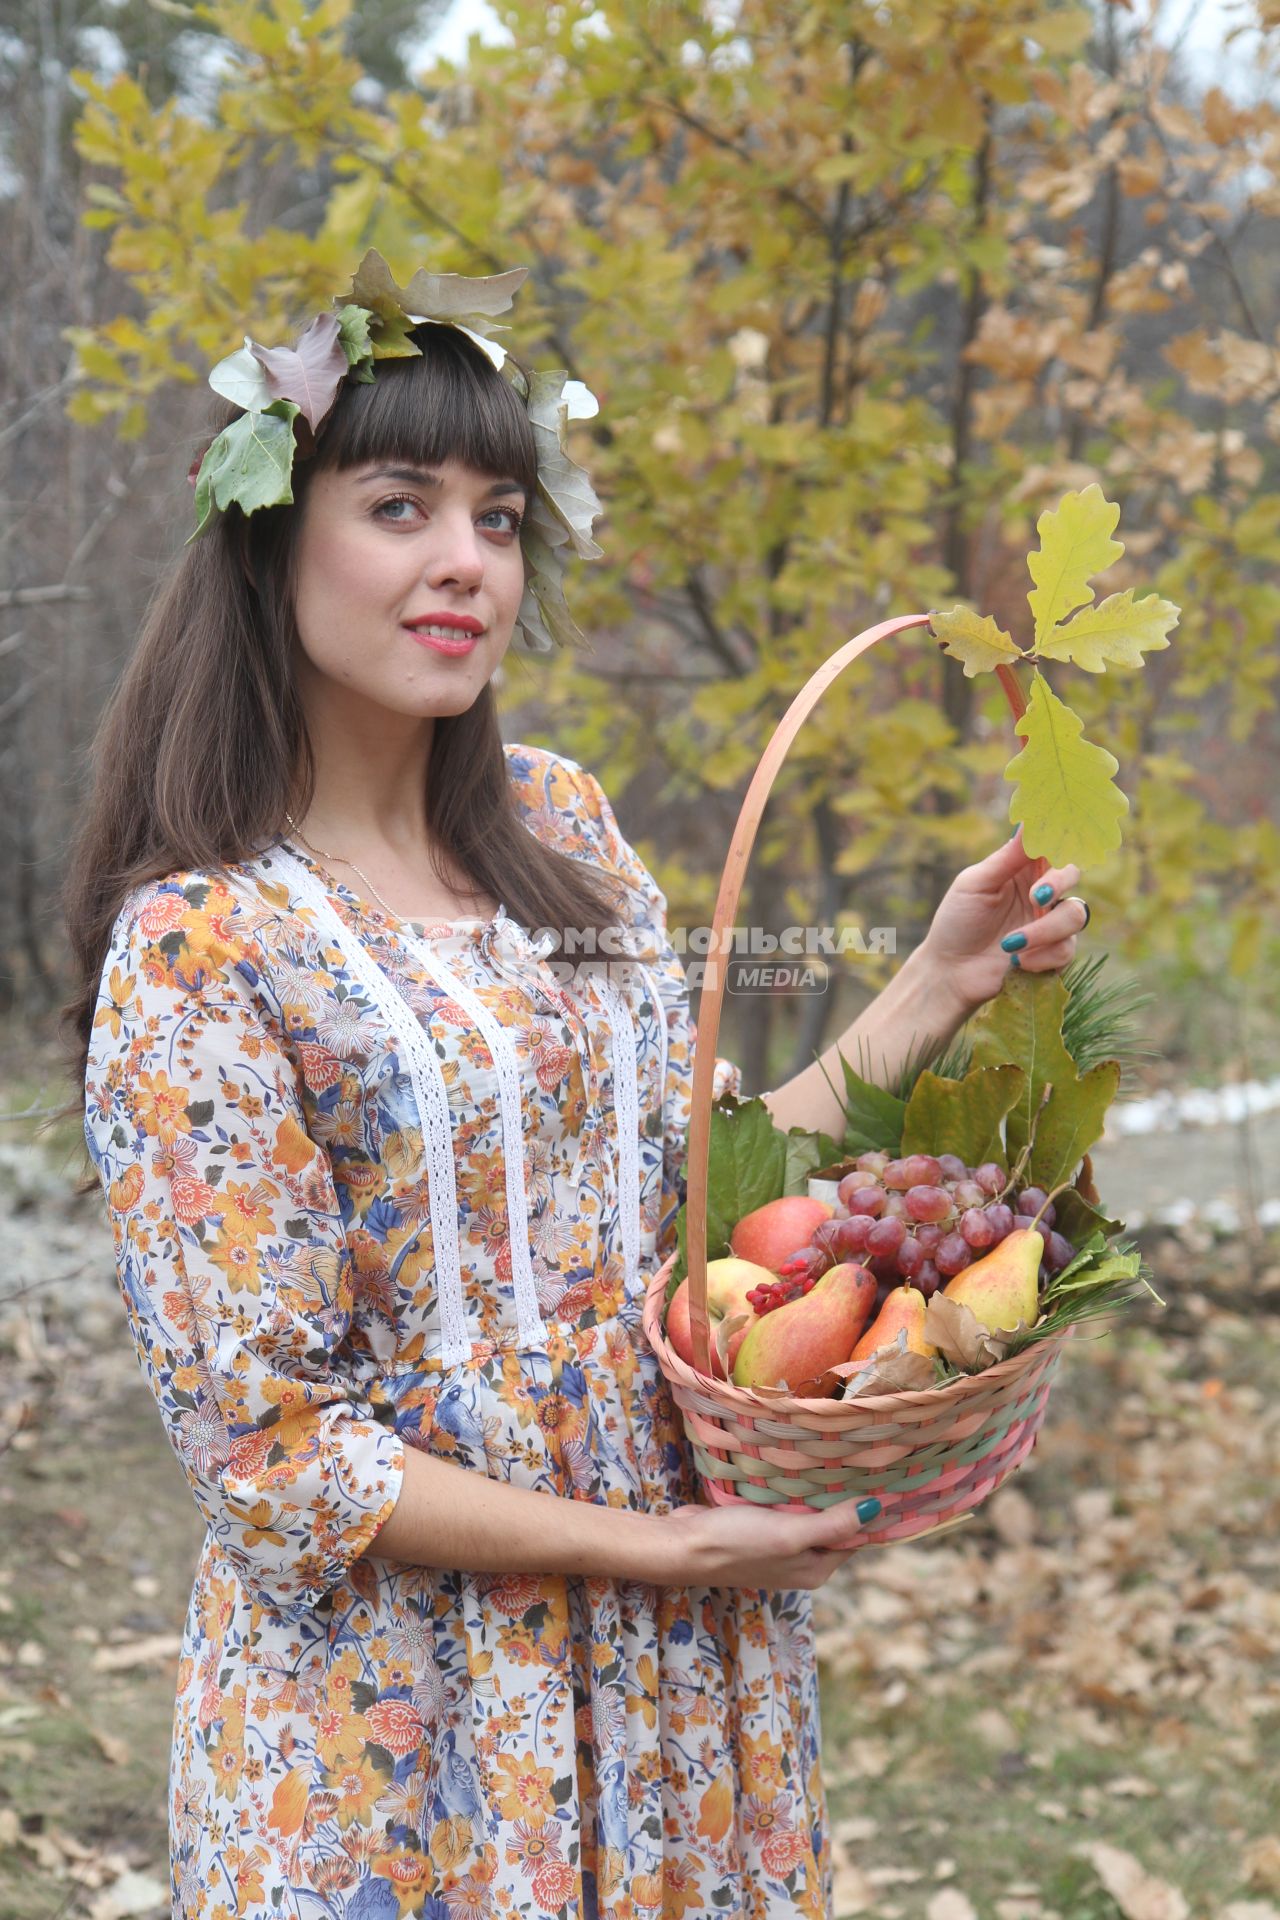 Иркутск. Девушка с корзиной на фоне осеннего леса.